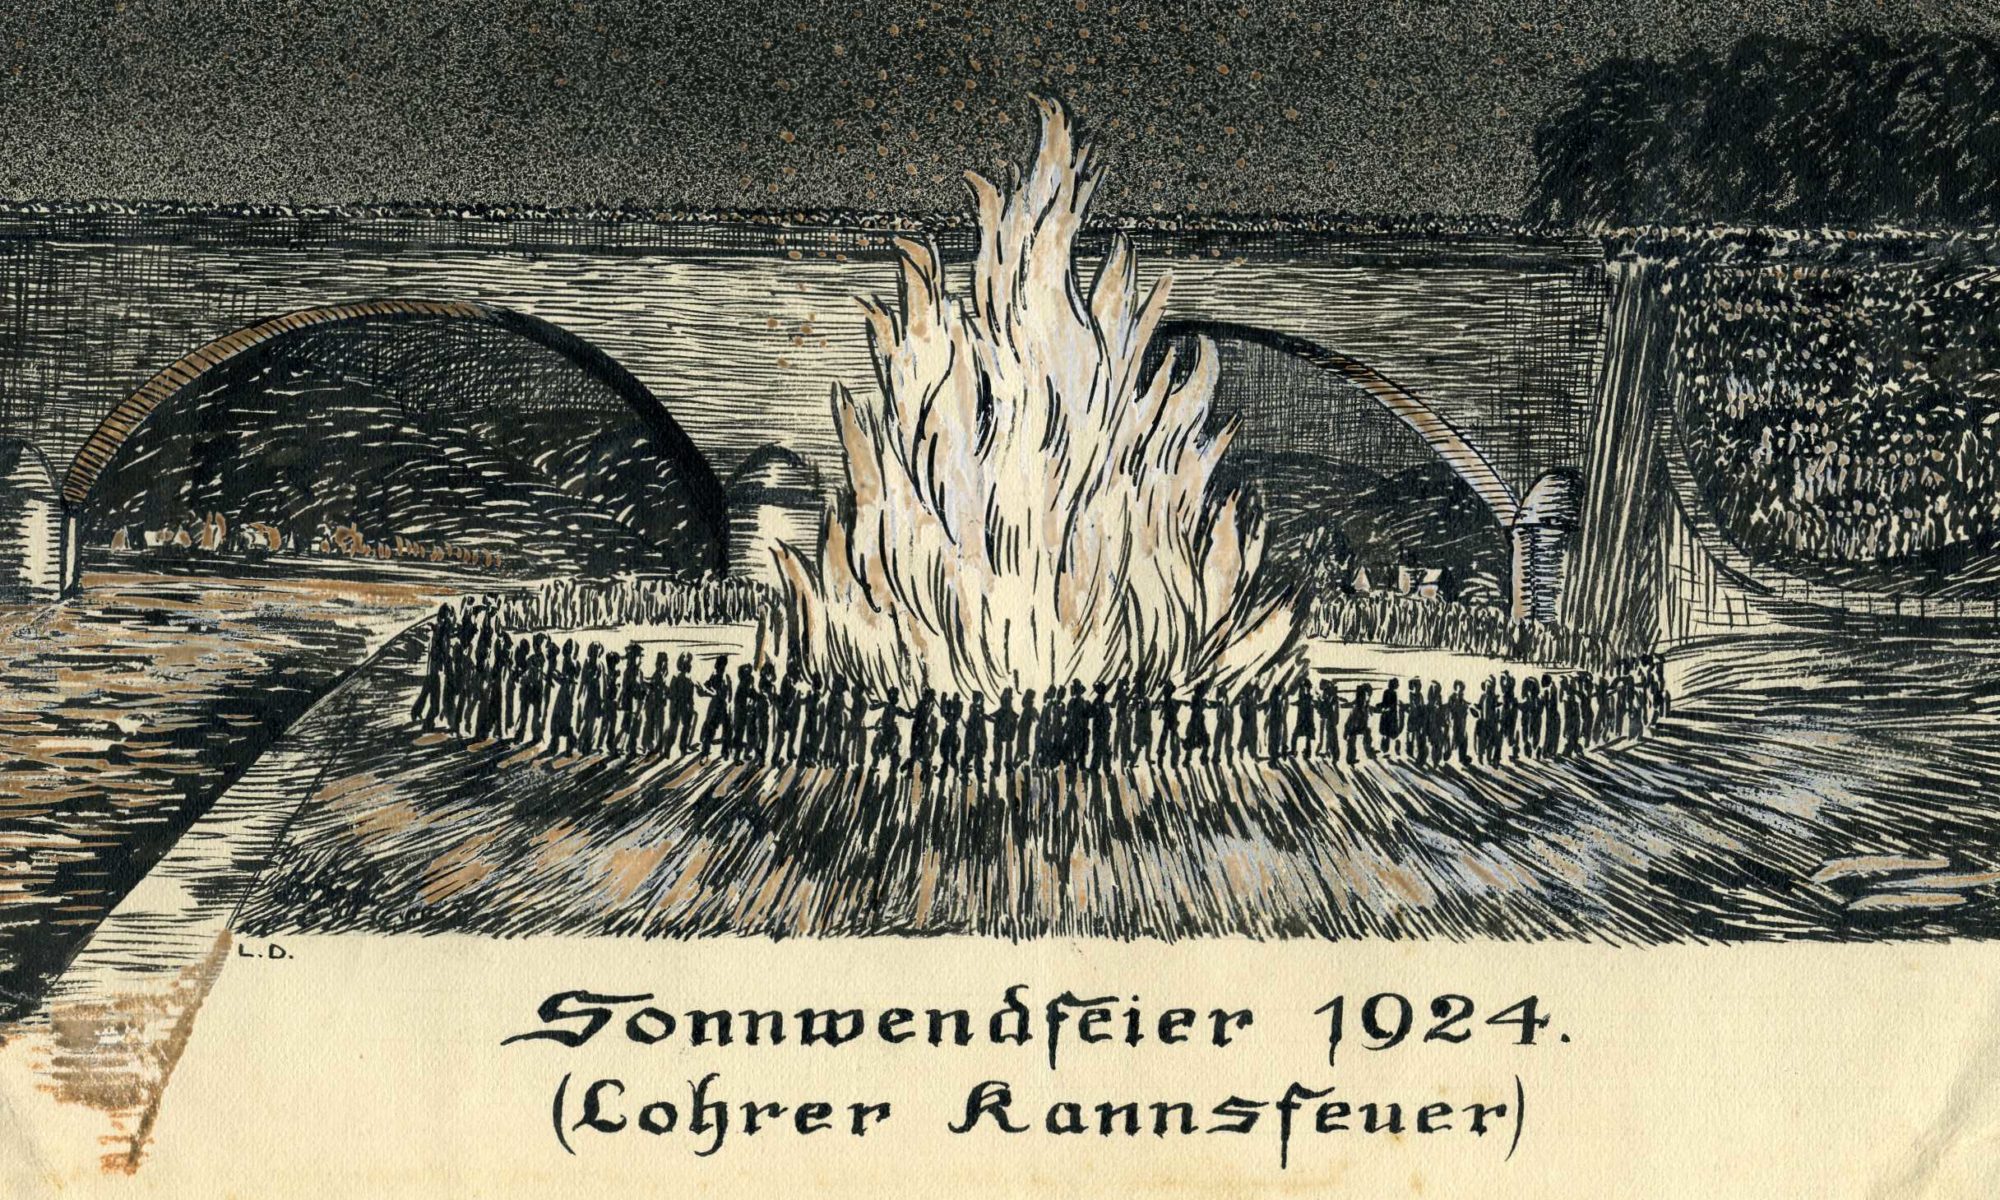 „Sonnwendfeier 1924. (Lohrer Kannsfeuer)“, Postkartenentwurf